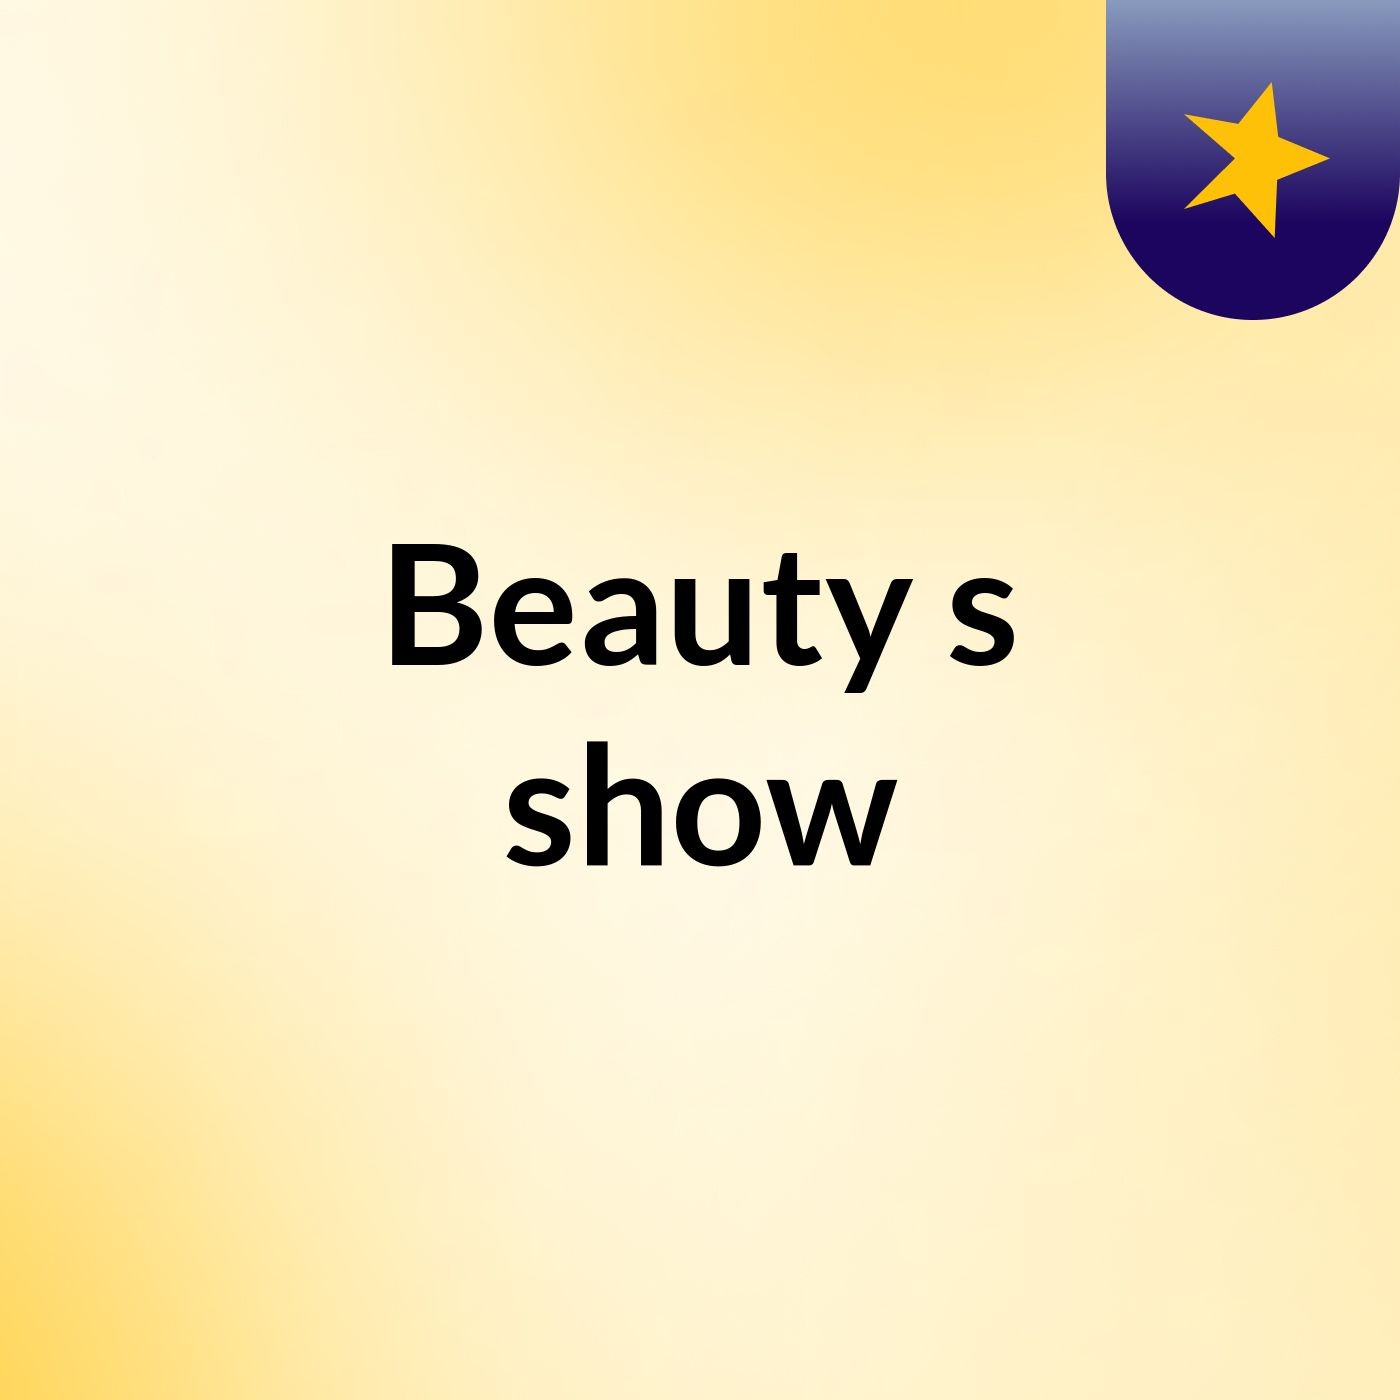 Beauty's show